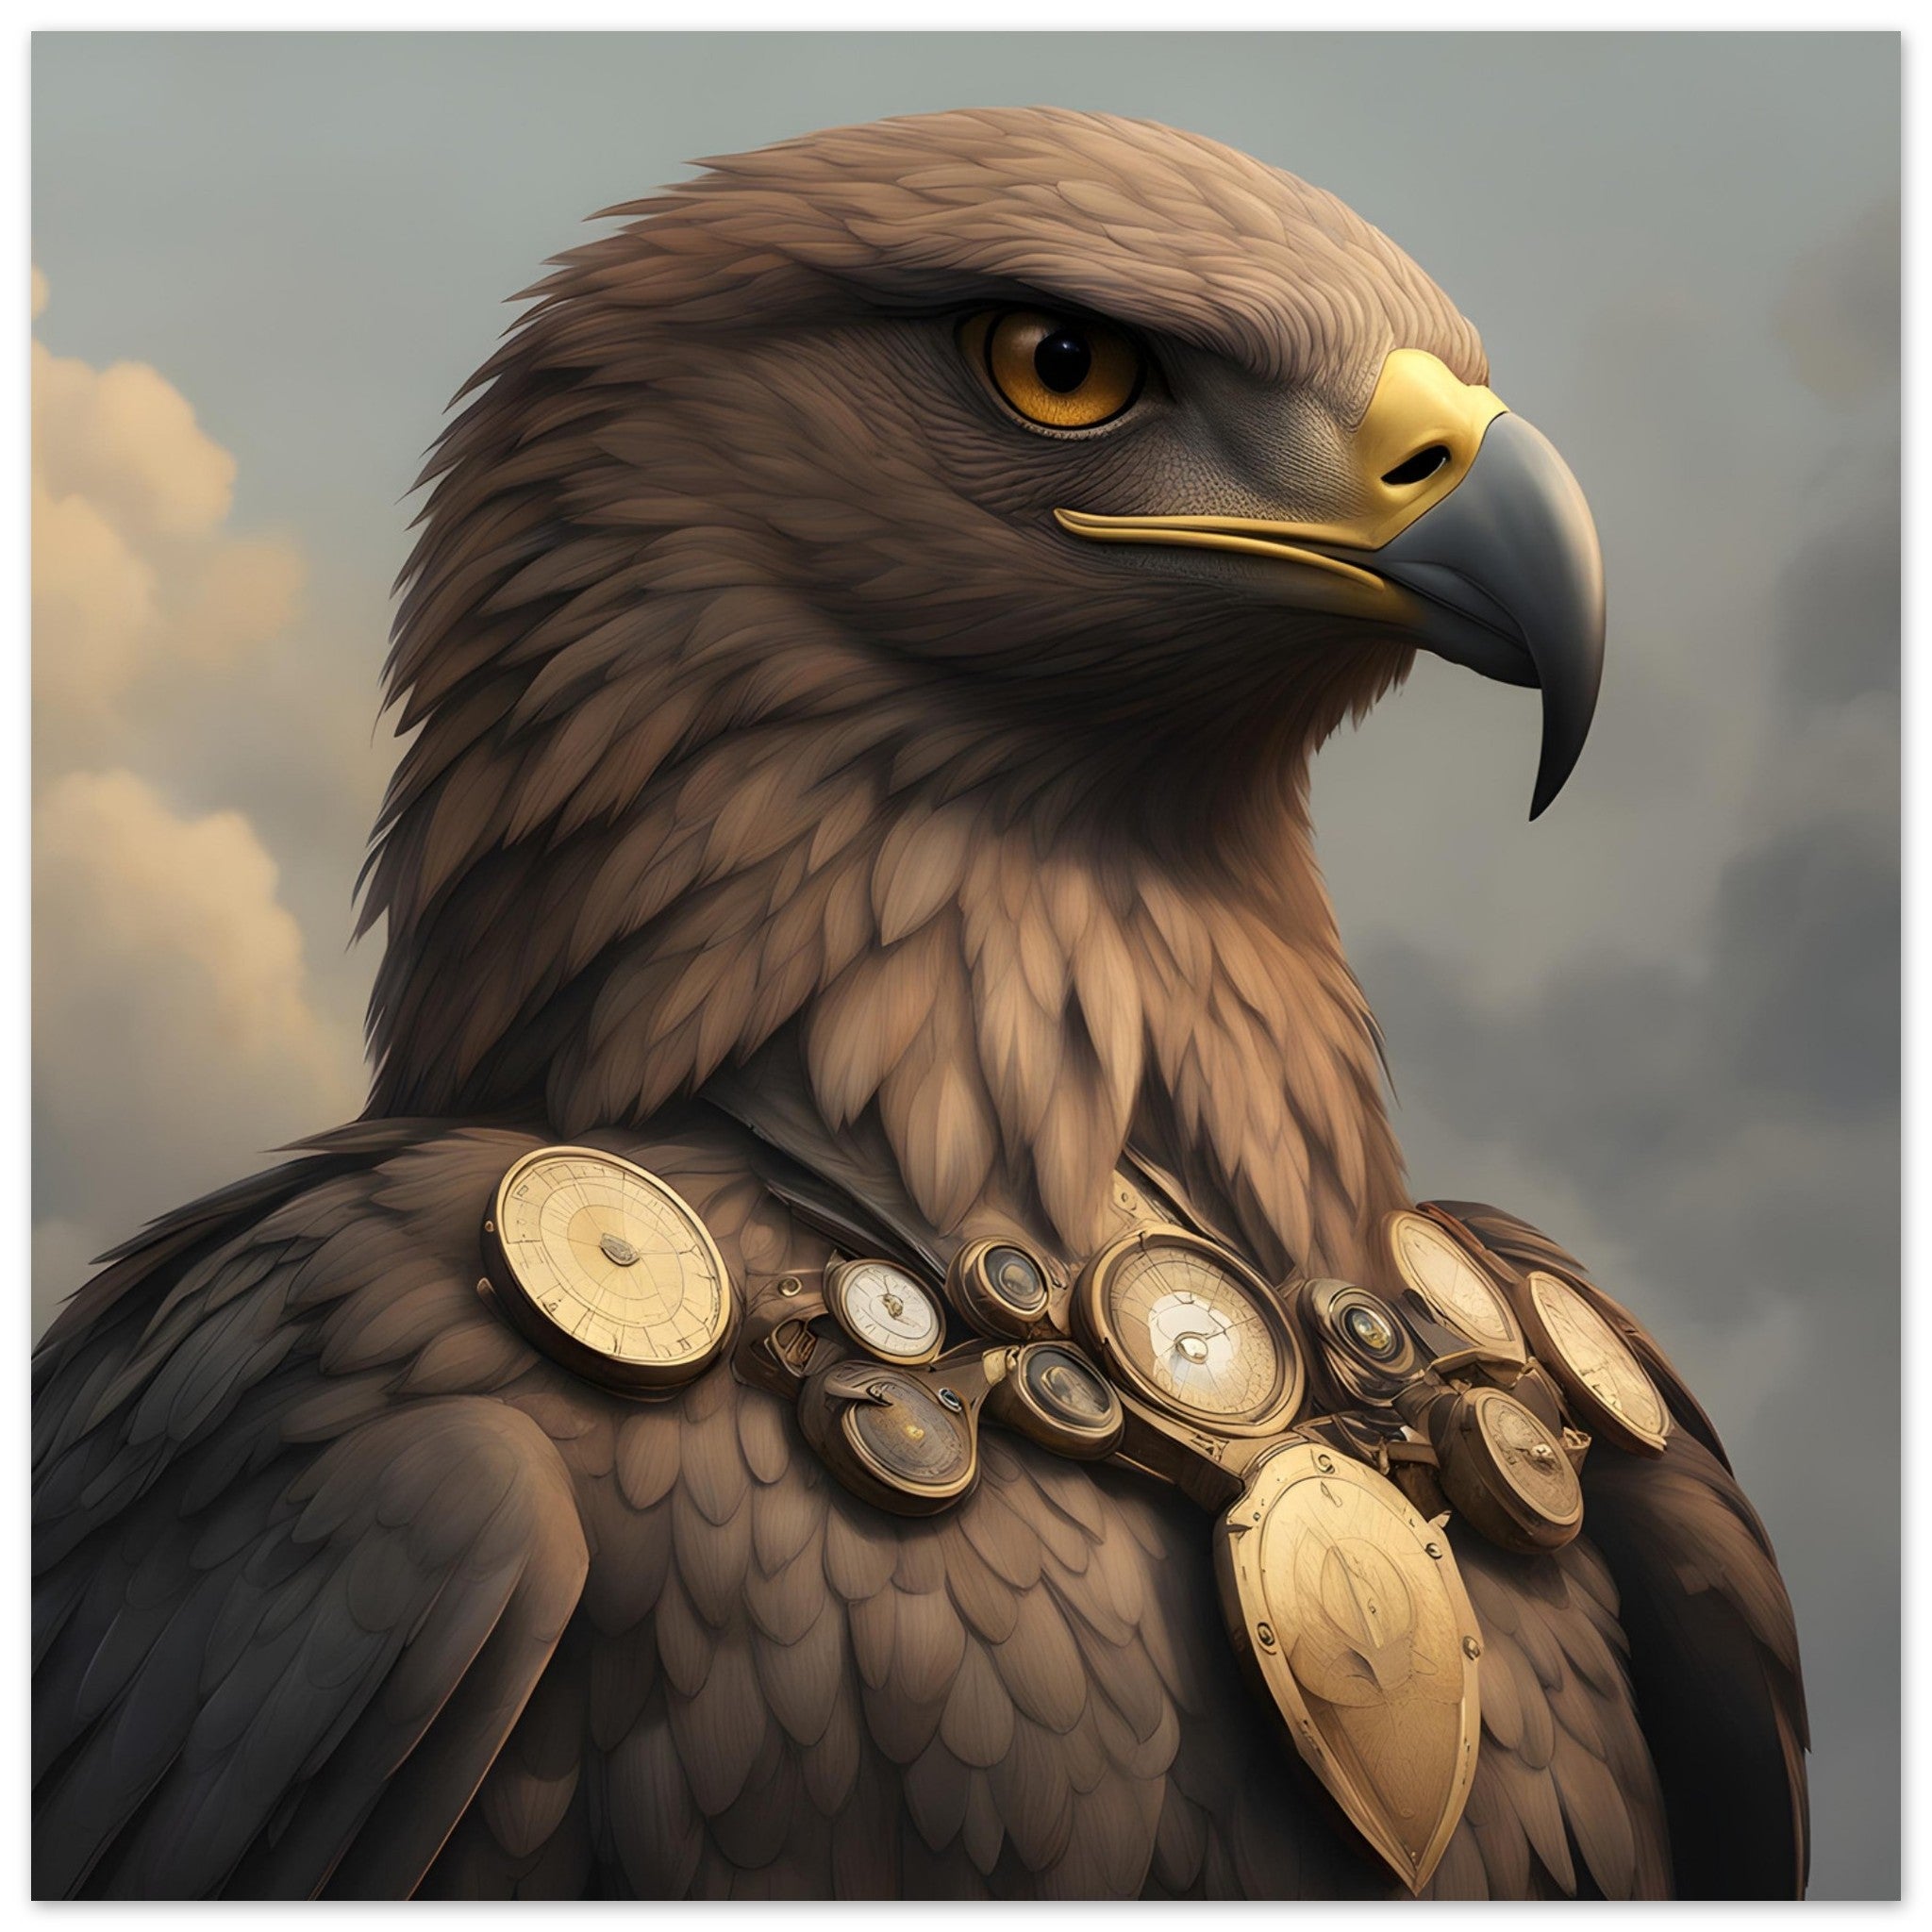 Steampunk Art - Captain Eagle